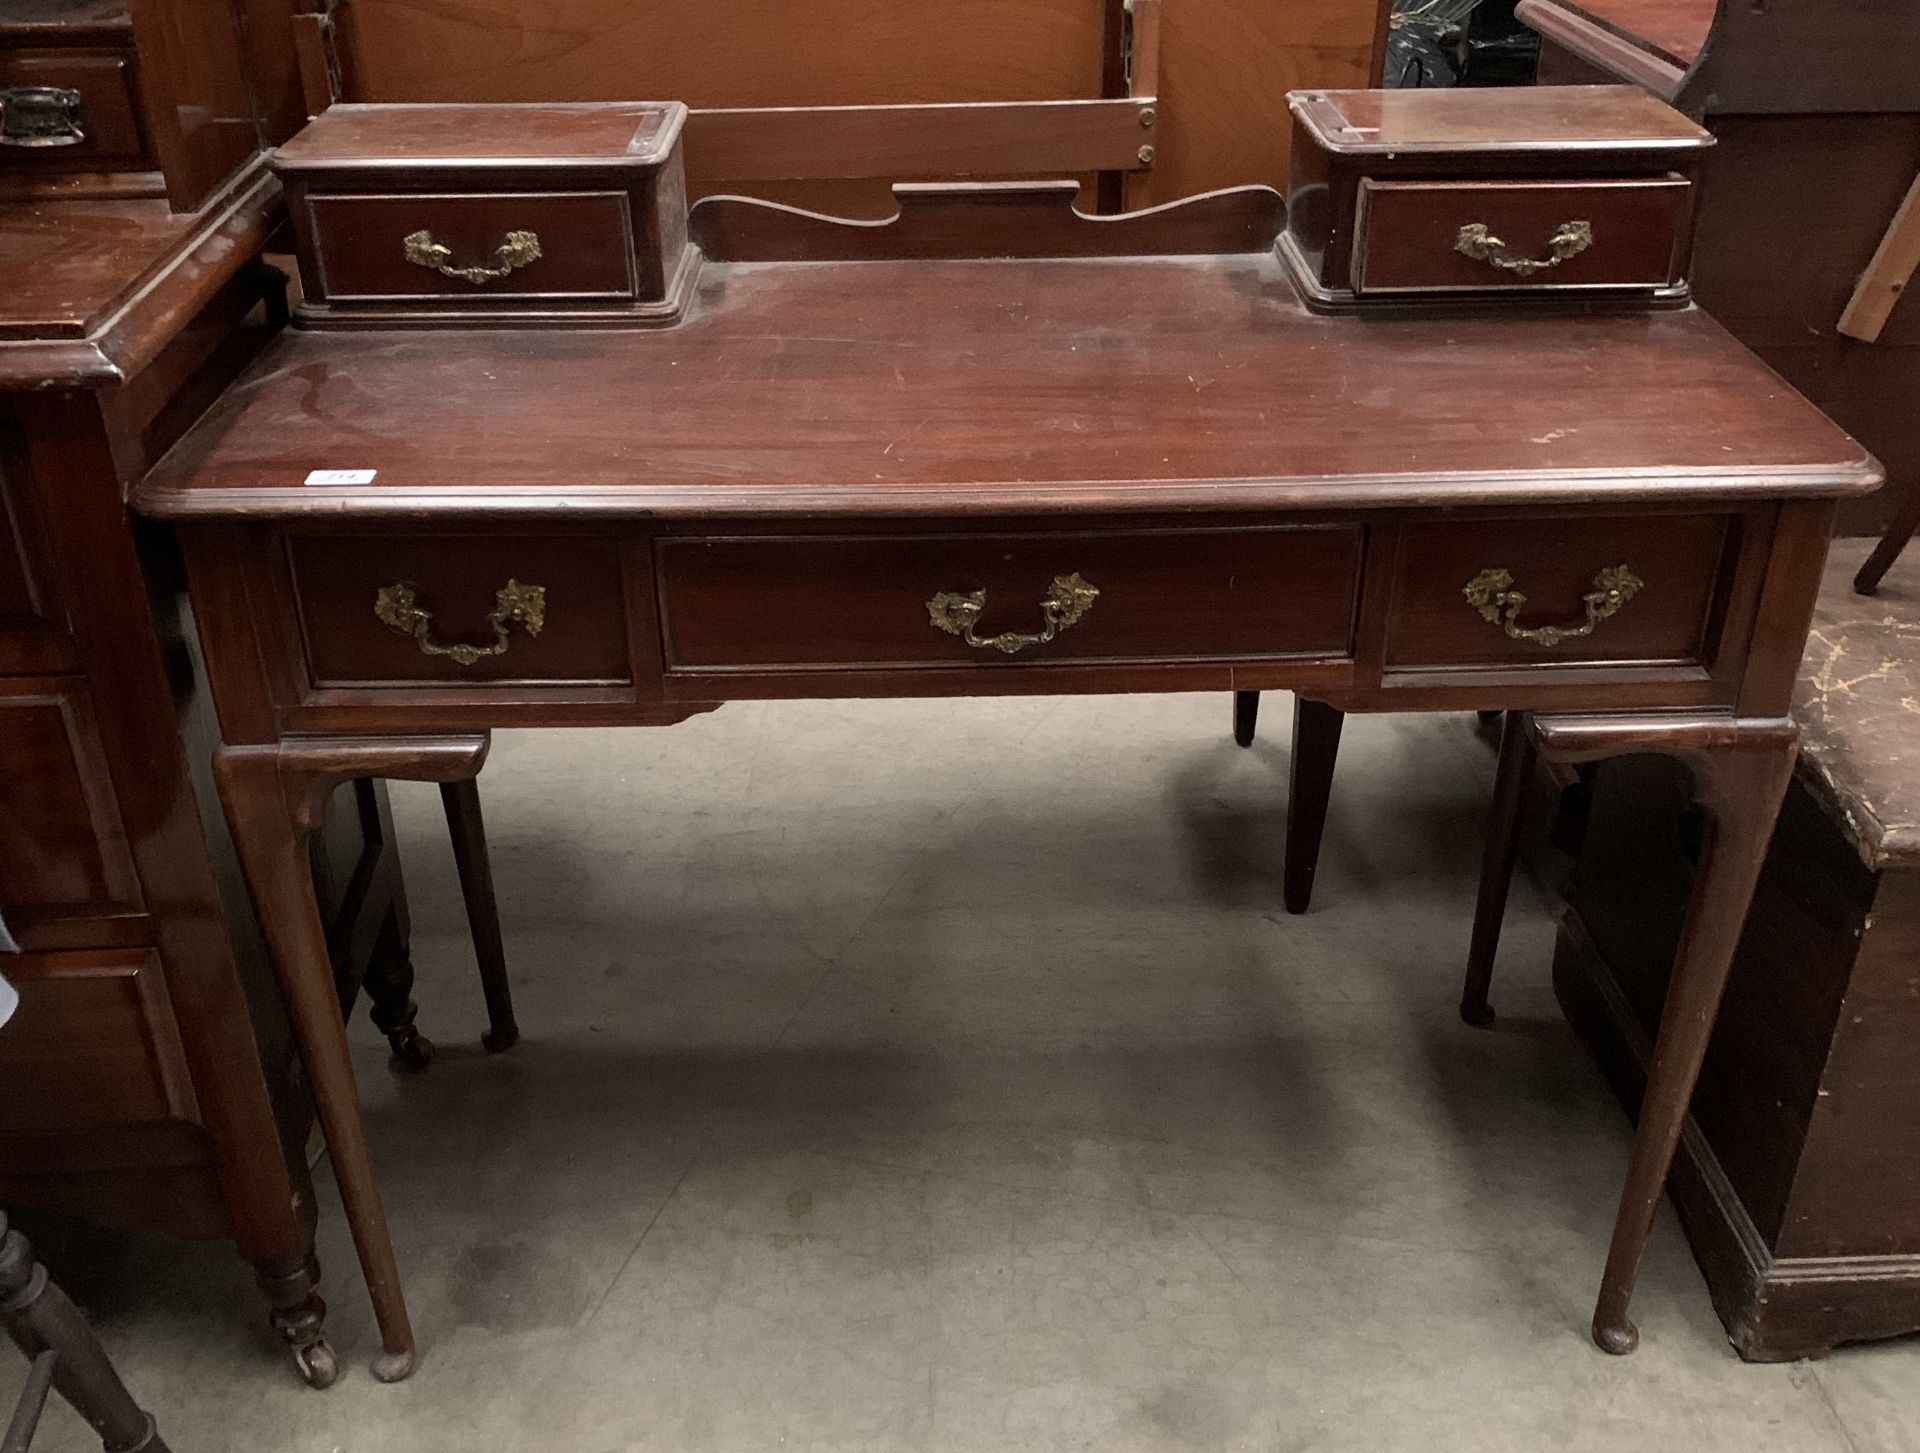 A mahogany dressing table - no mirror back section 104cm long